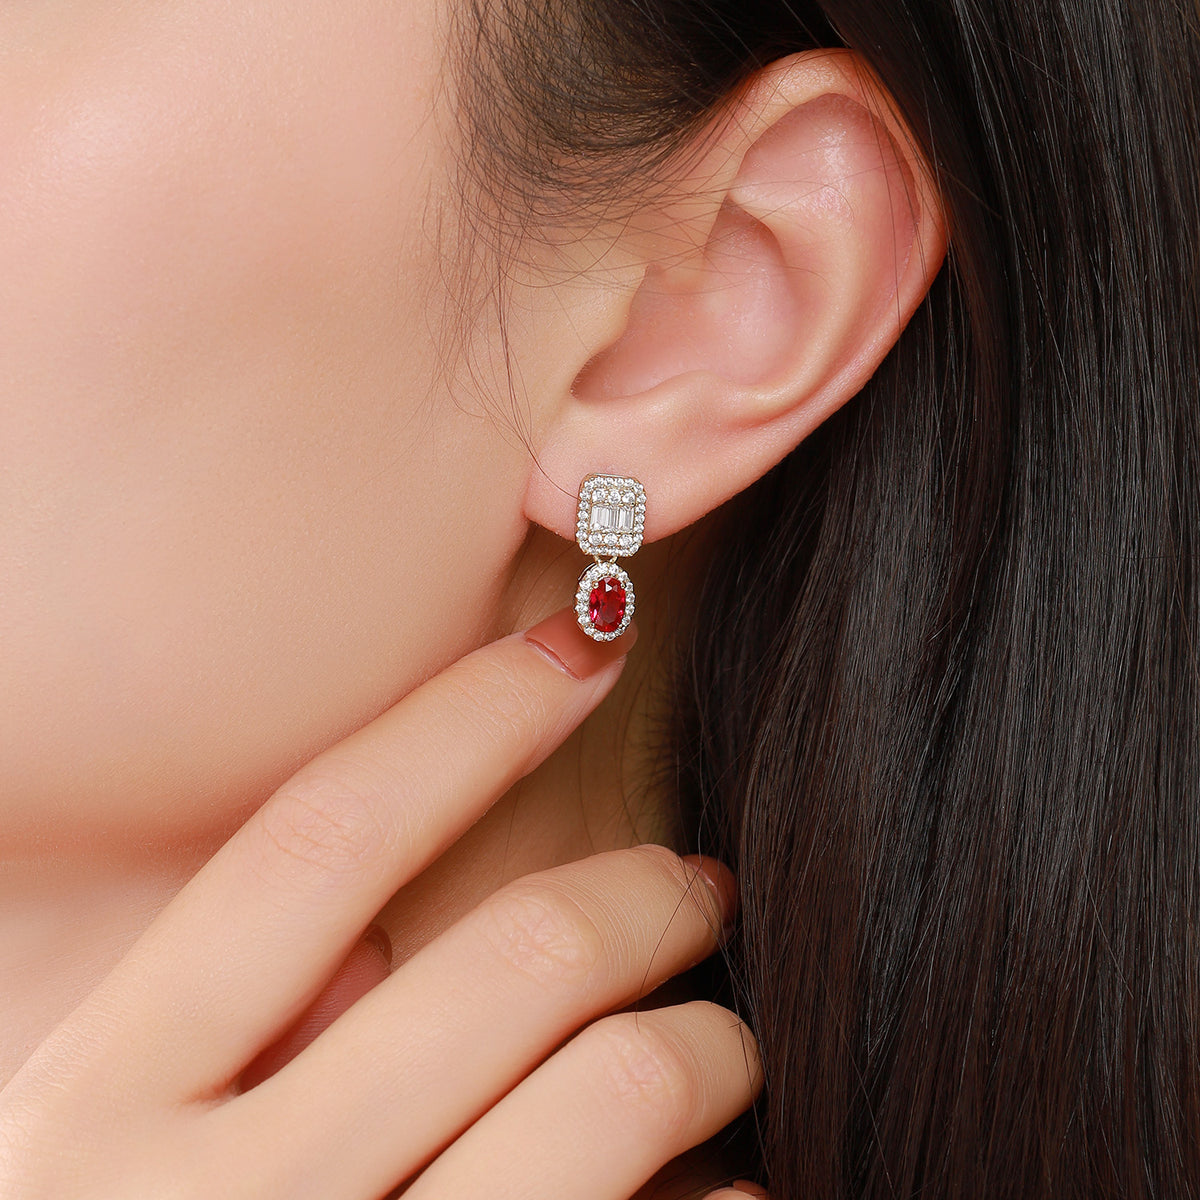 Dissoo® Oval Ruby Red Water Drop Stud Earring in 14K Gold Vermeil